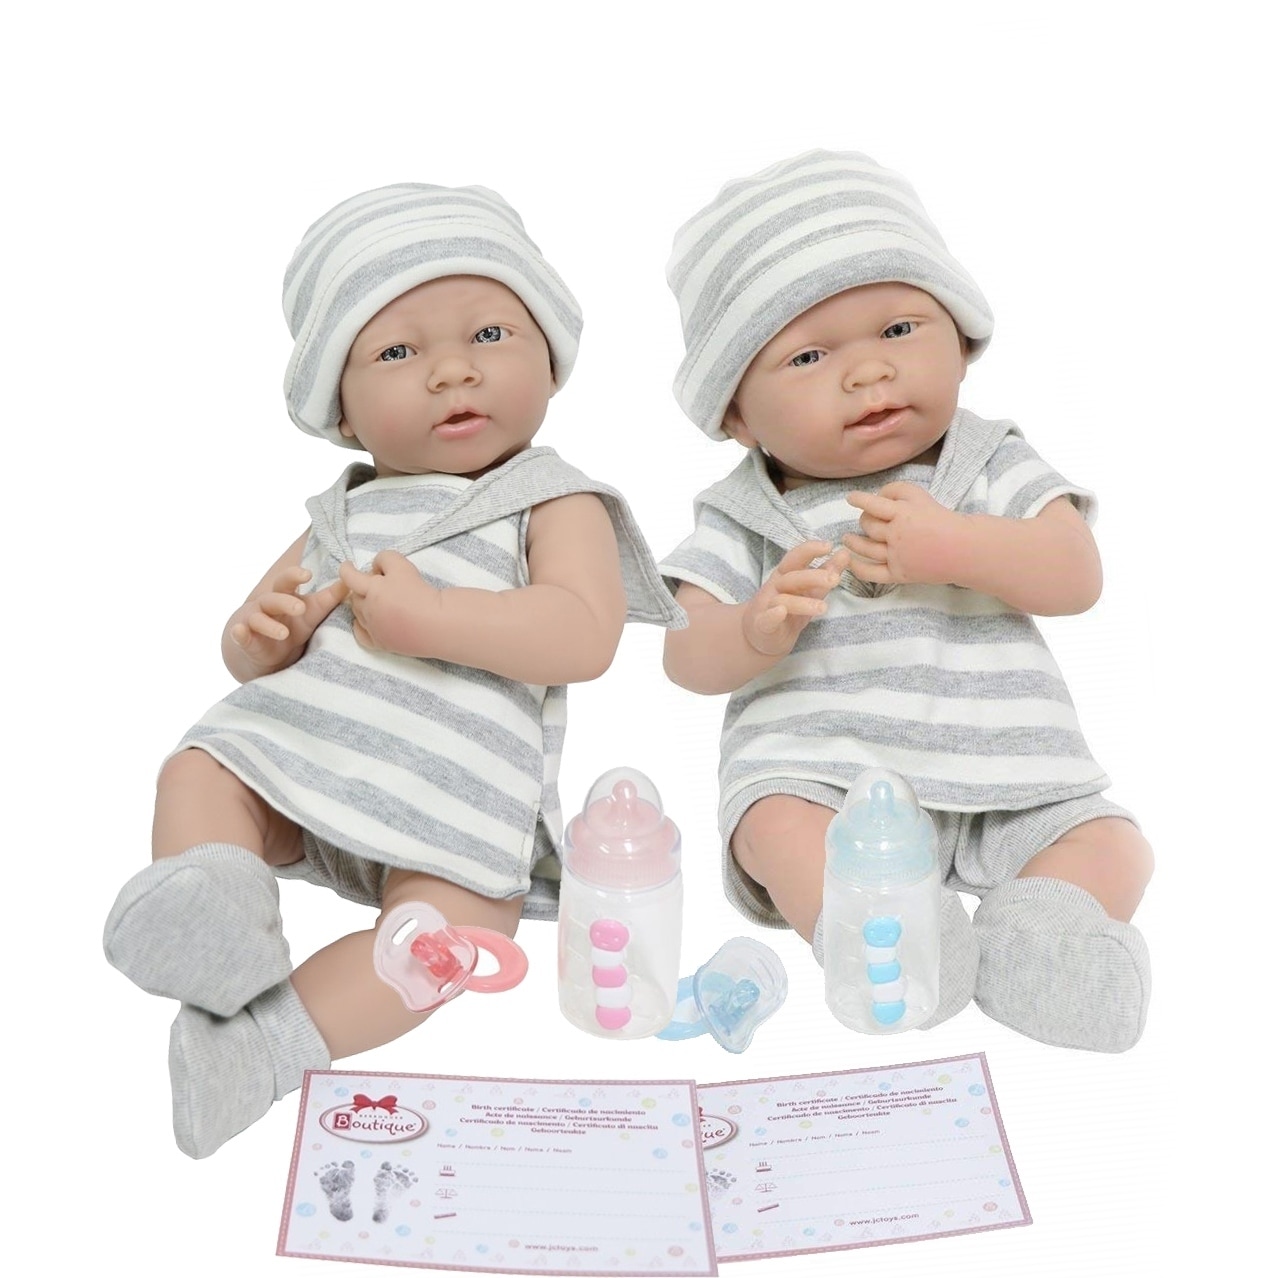 twin dolls boy and girl